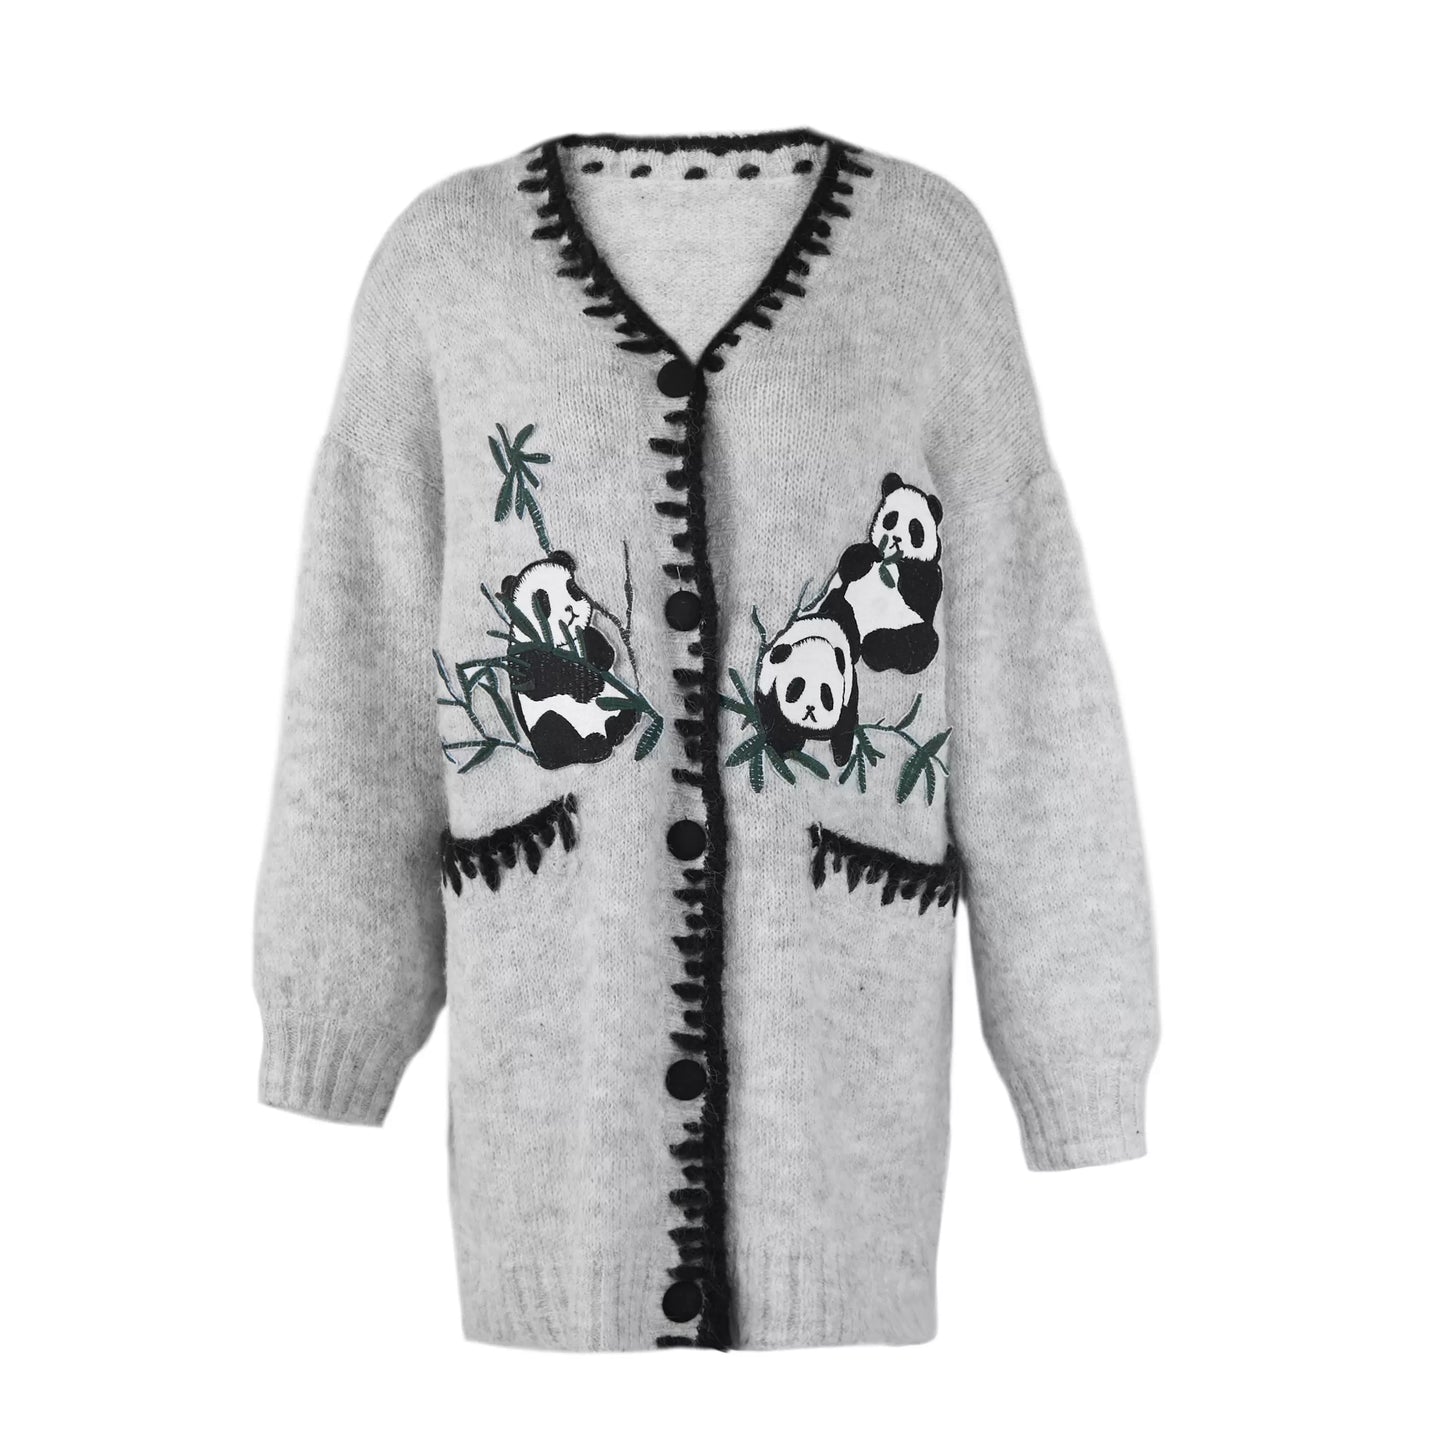 grey panda knitted cardigan 